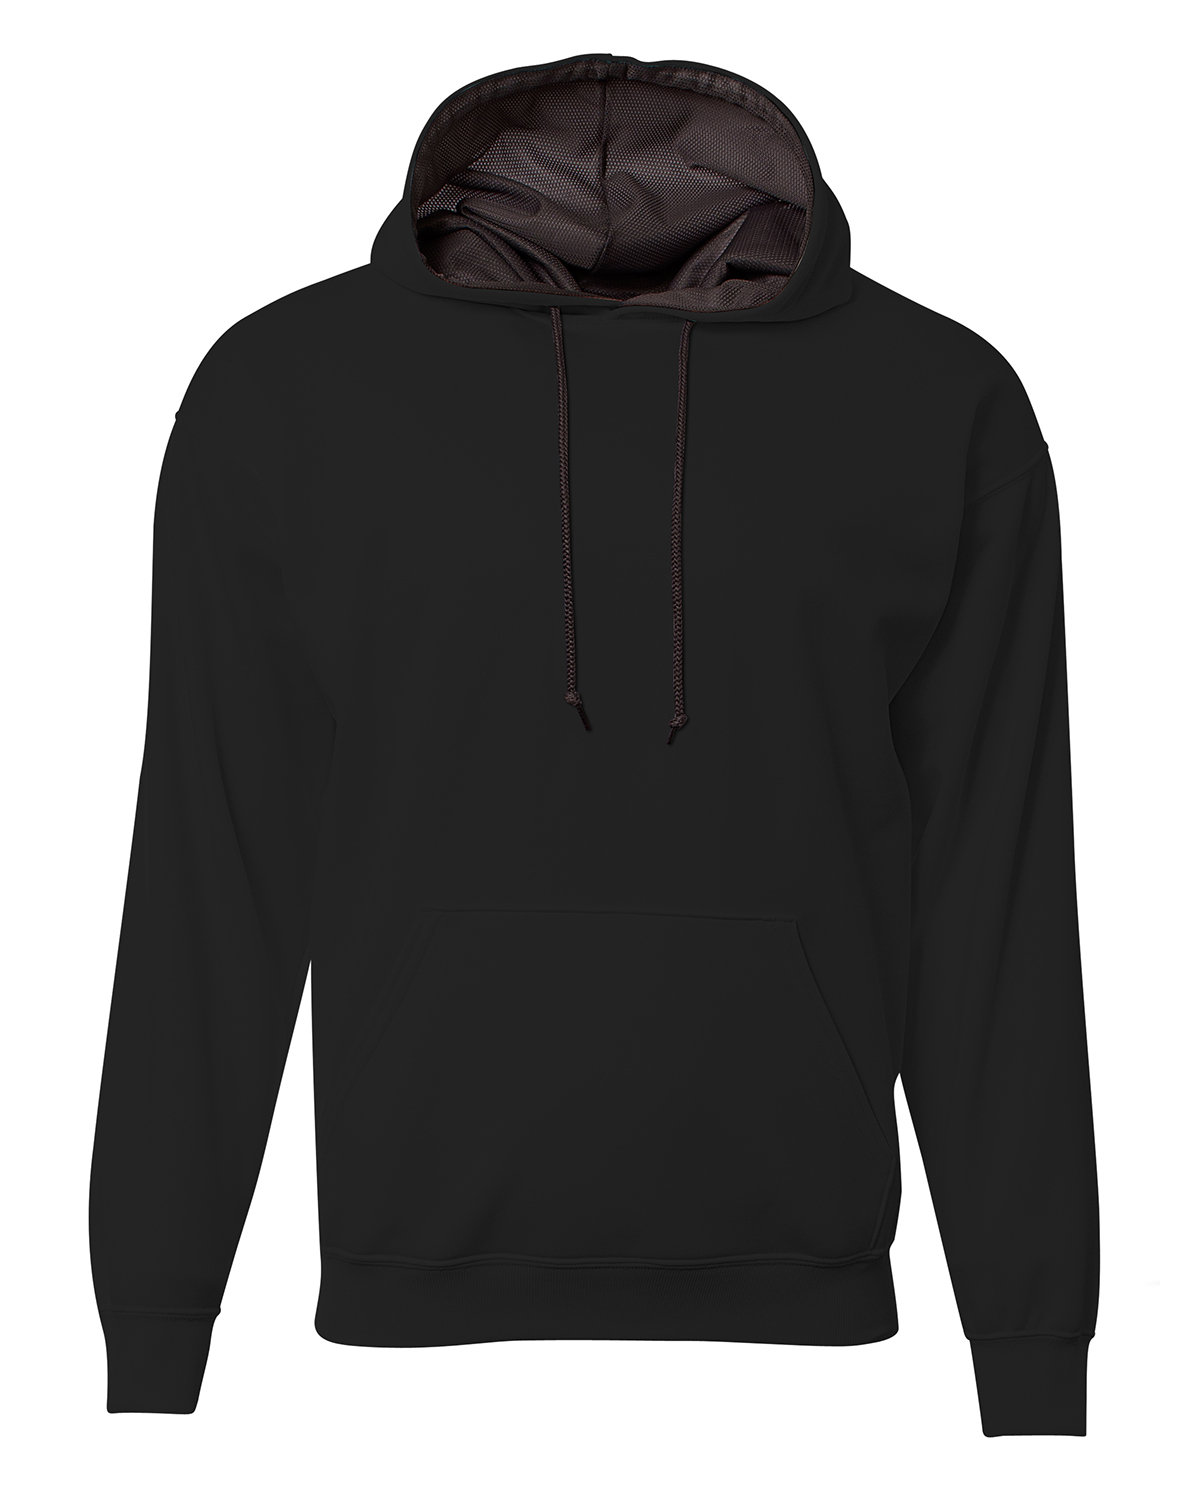 A4 Men's Sprint Tech Fleece Hooded Sweatshirt BLACK 